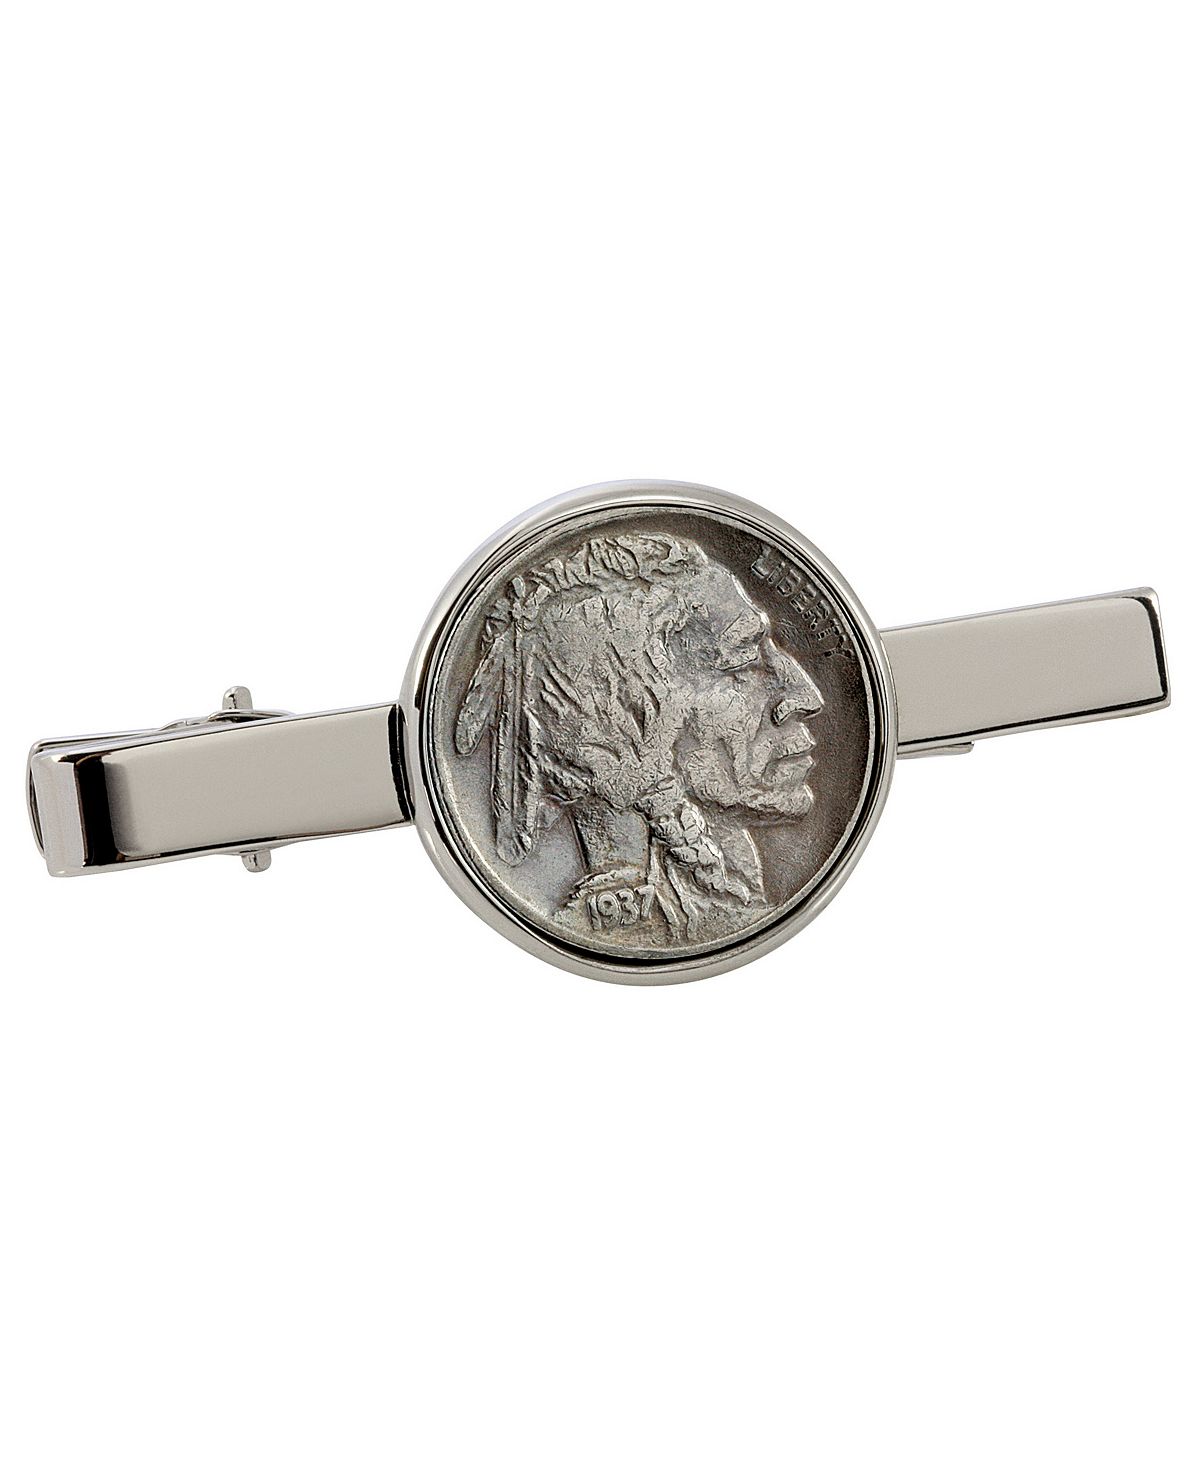 Зажим для галстука в виде никелевой монеты Buffalo American Coin Treasures russia 1727 silver plated brass commemorative collectible coin gift lucky challenge coin